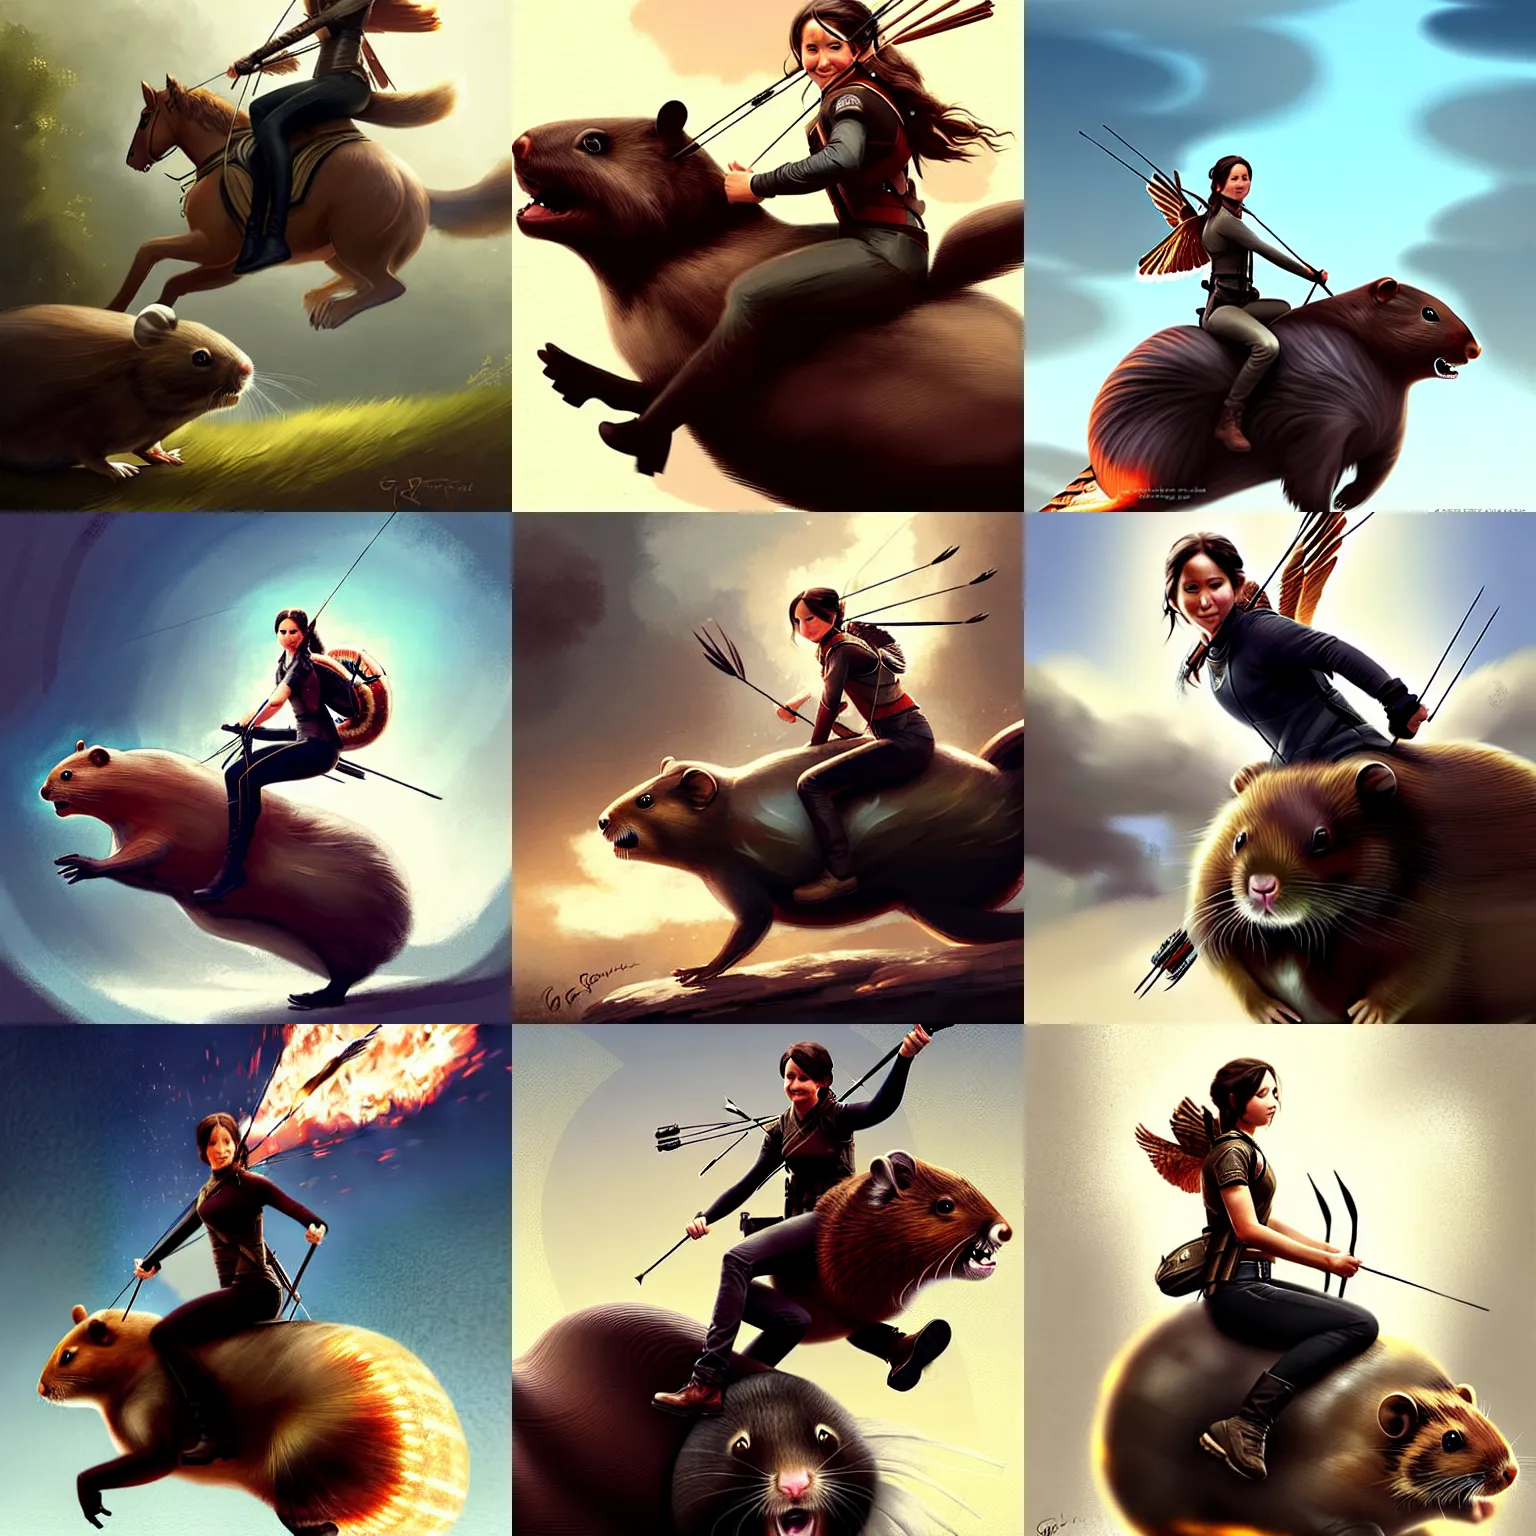 Prompt: katniss everdeen riding on the back of a giant hamster, digital art by greg rutkowski